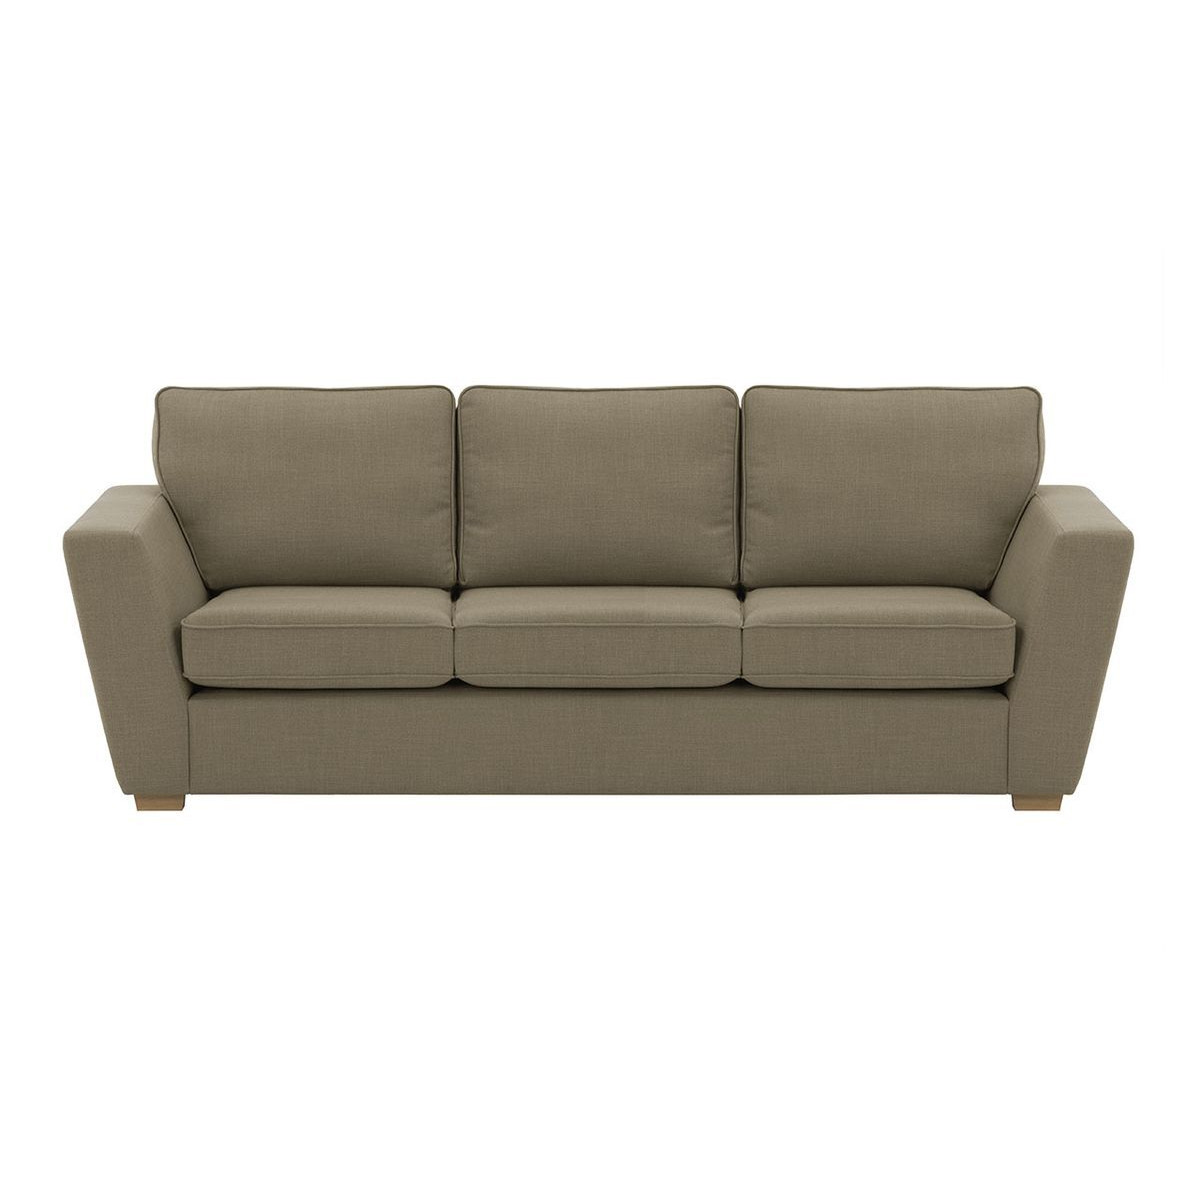 Inco 3 Seater Sofa, beige - image 1